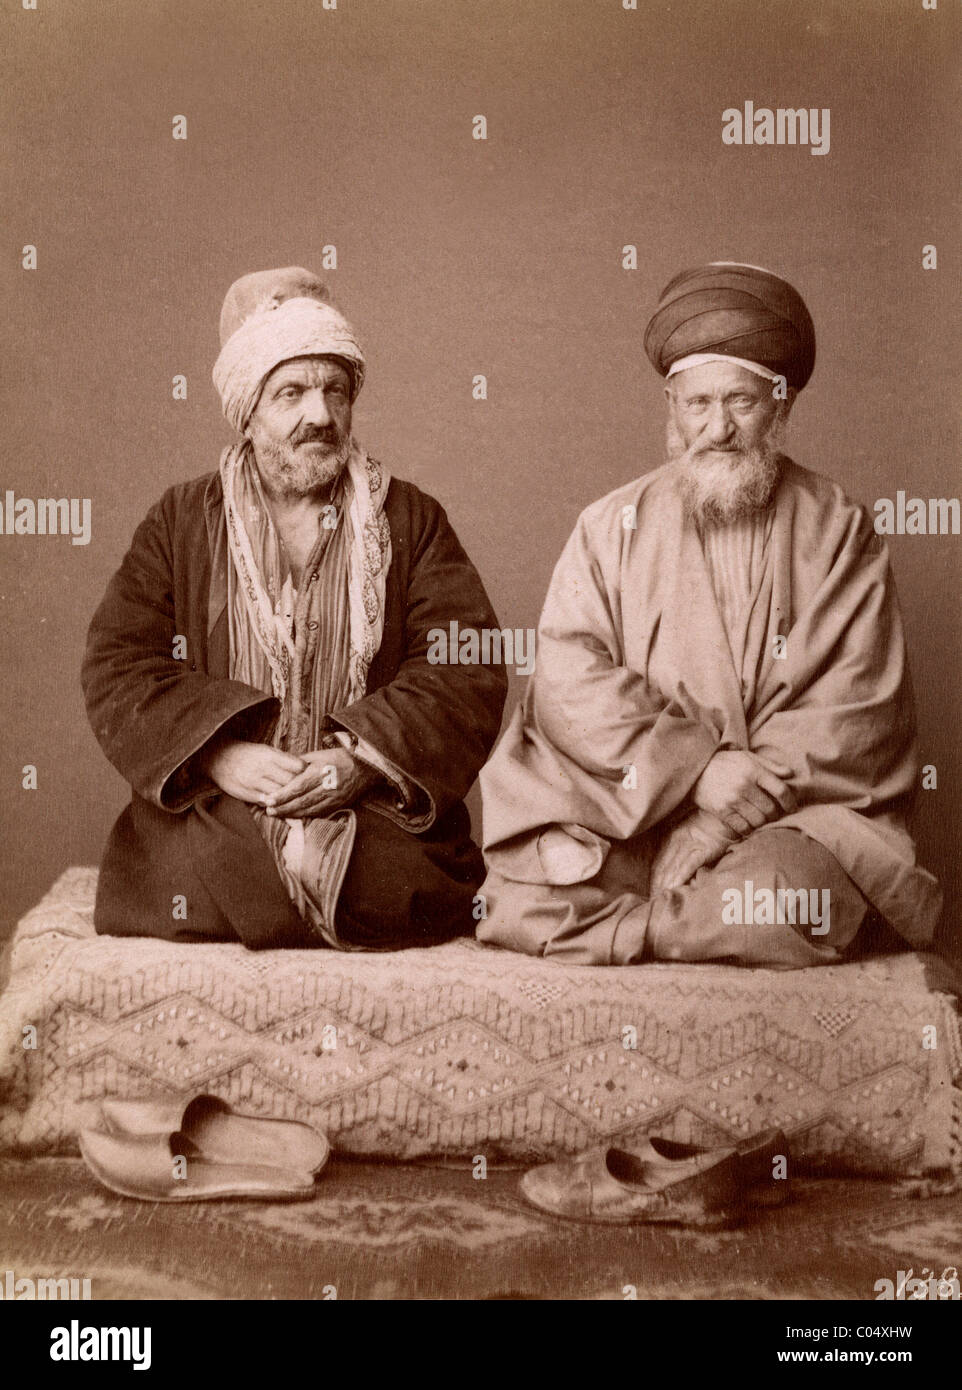 Ottoman Turks in Traditional Clothing and Turbans Praying, Istanbul (Constantinople) Studio Photo. Vintage Albumen Print c1865. Stock Photo